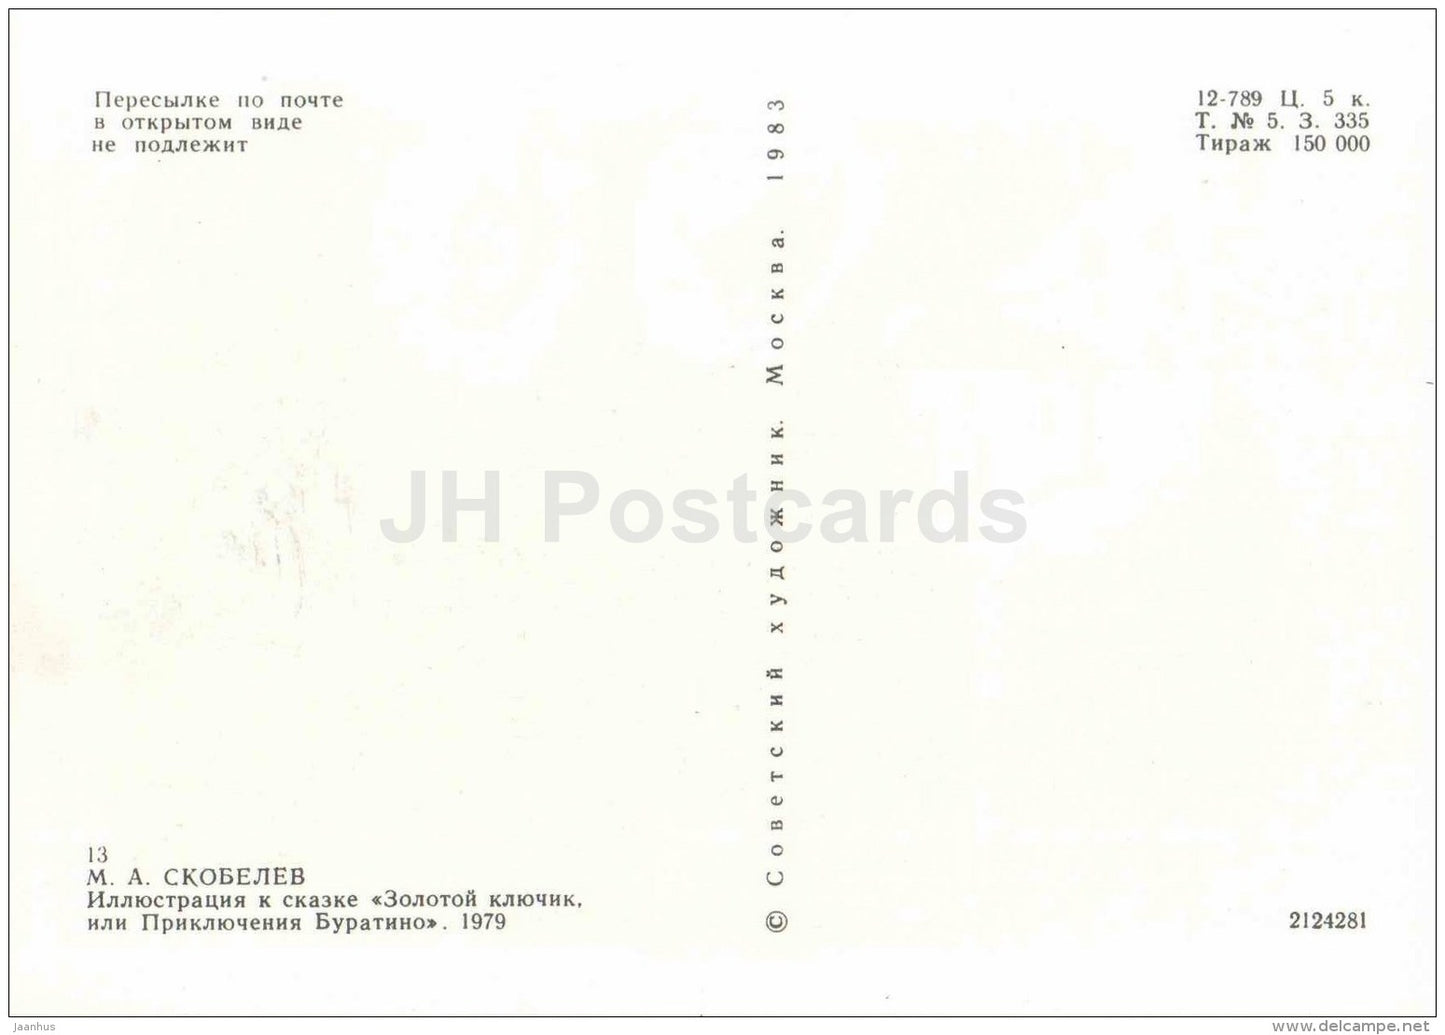 Buratino - Golden Key - Pinocchio and Buratino - 1983 - Russia USSR - unused - JH Postcards